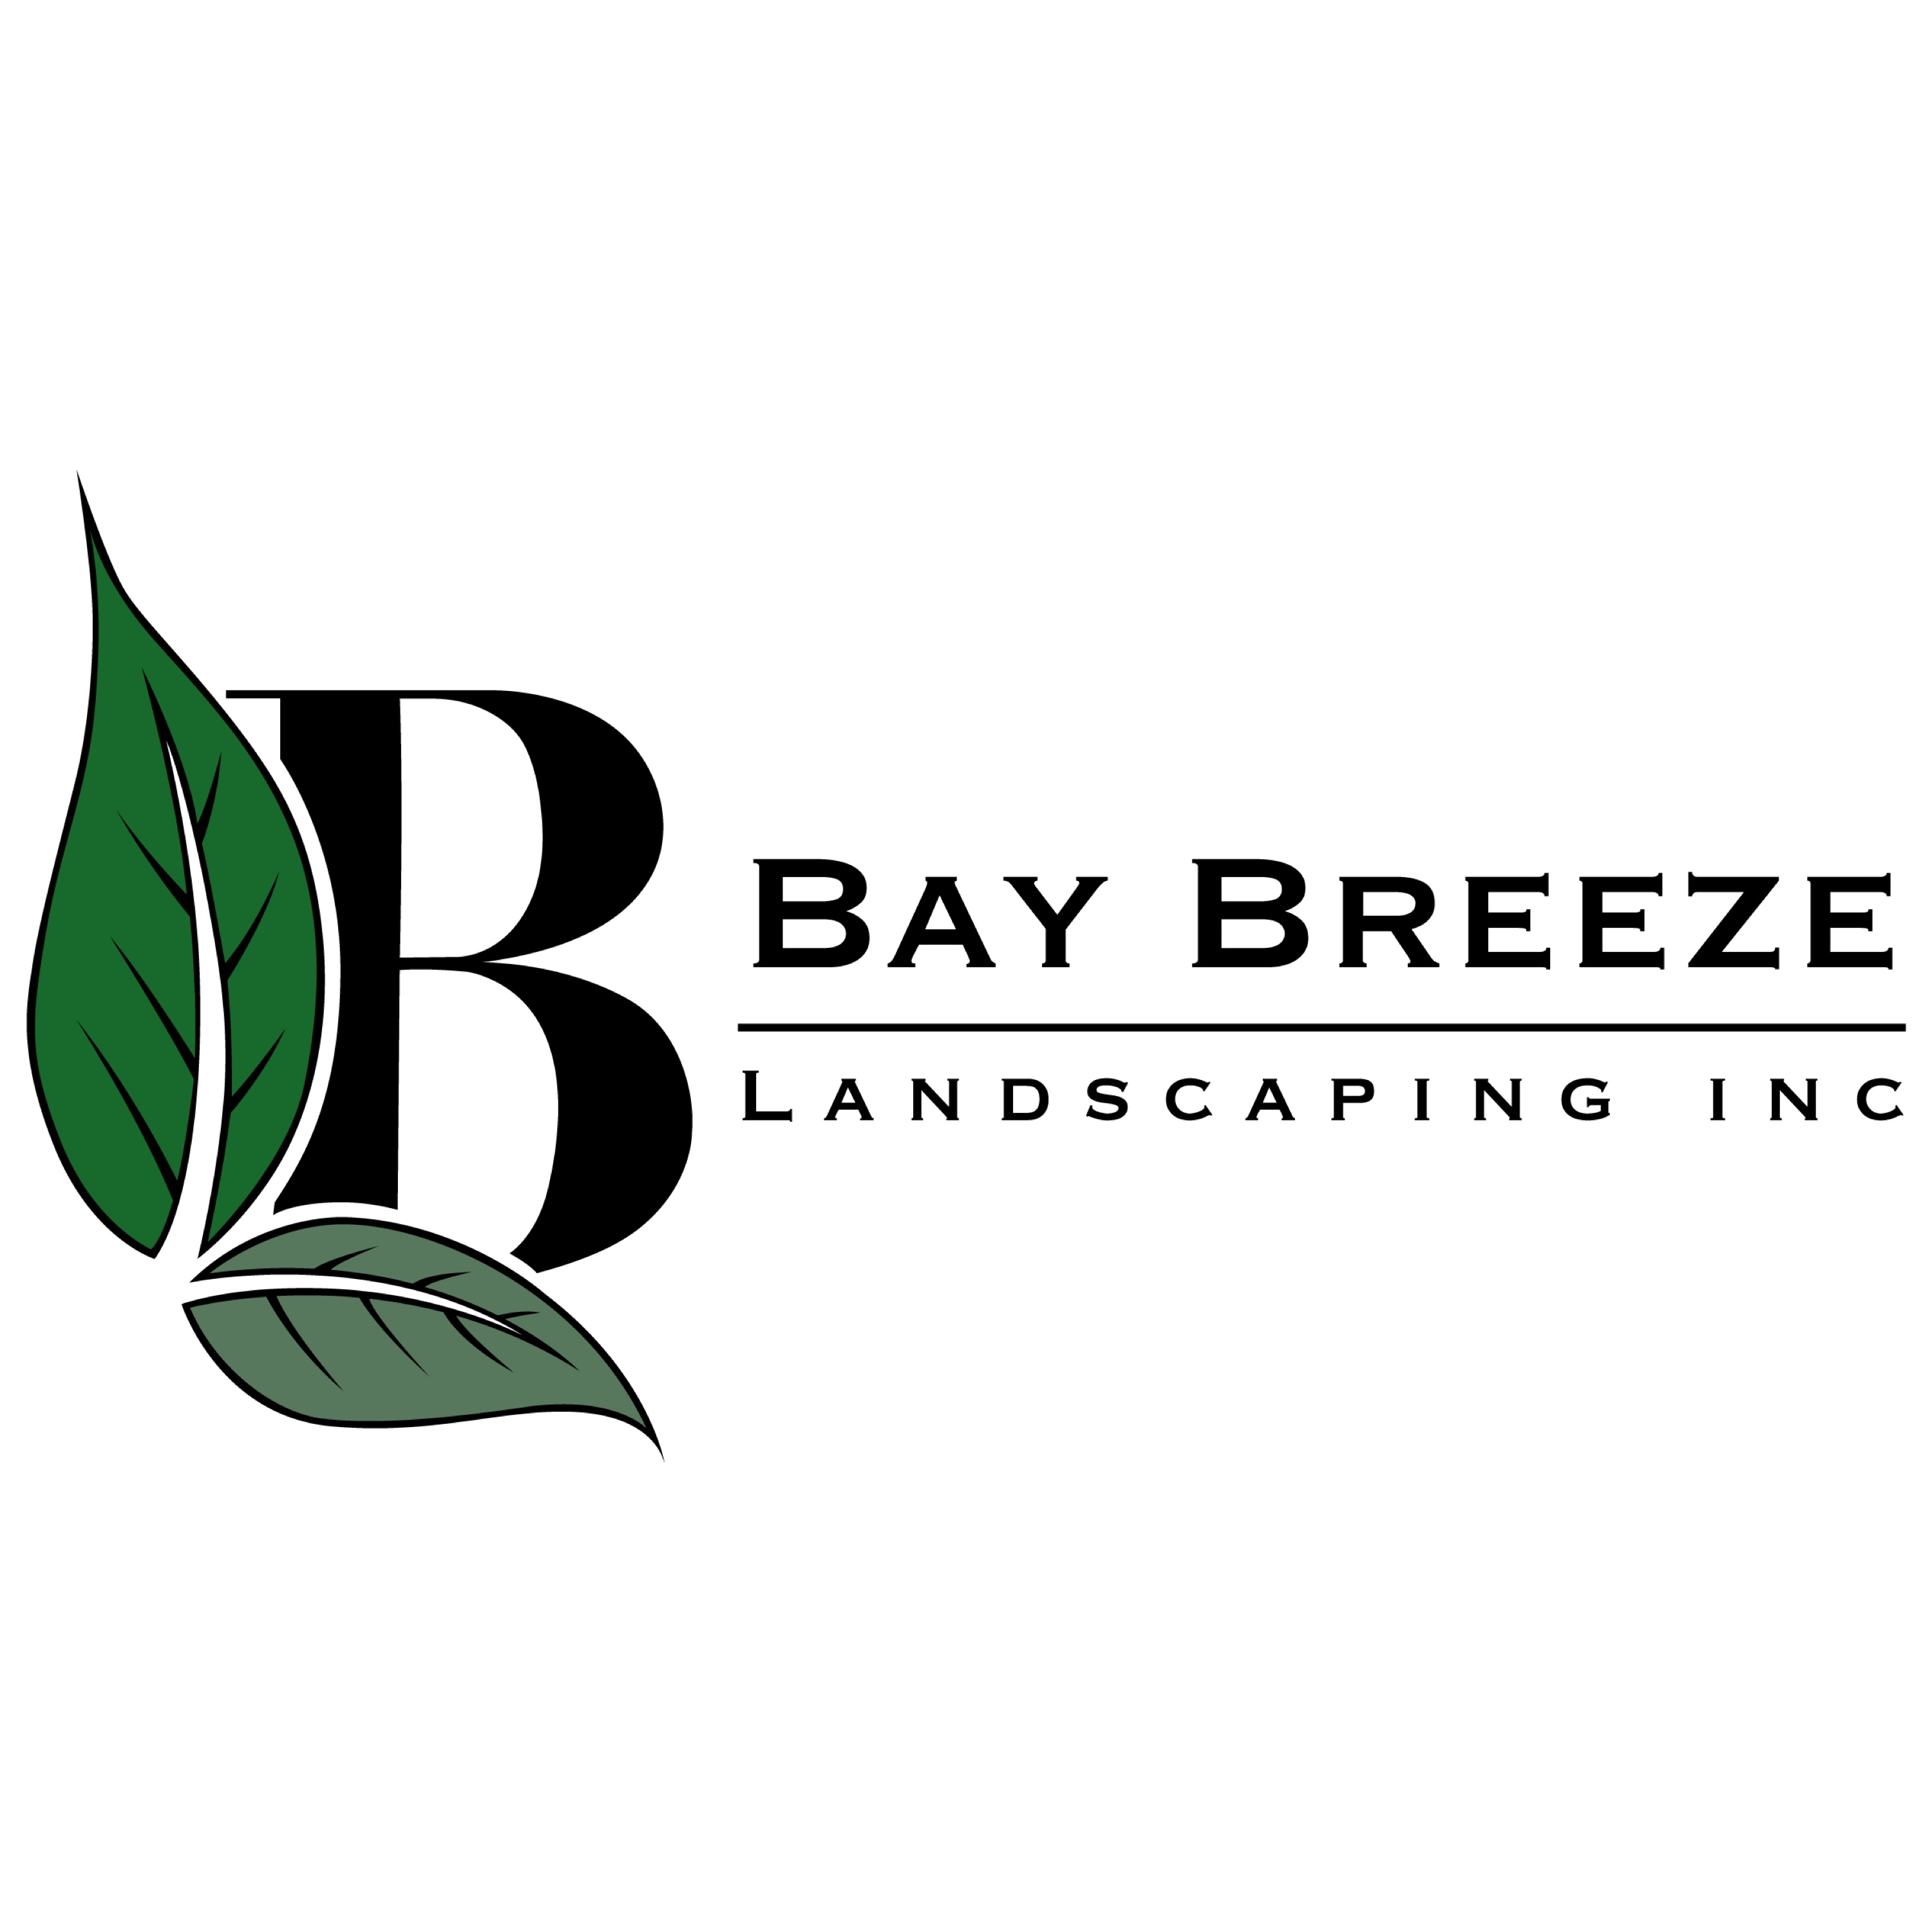 Bay Breeze Landscaping Inc Logo